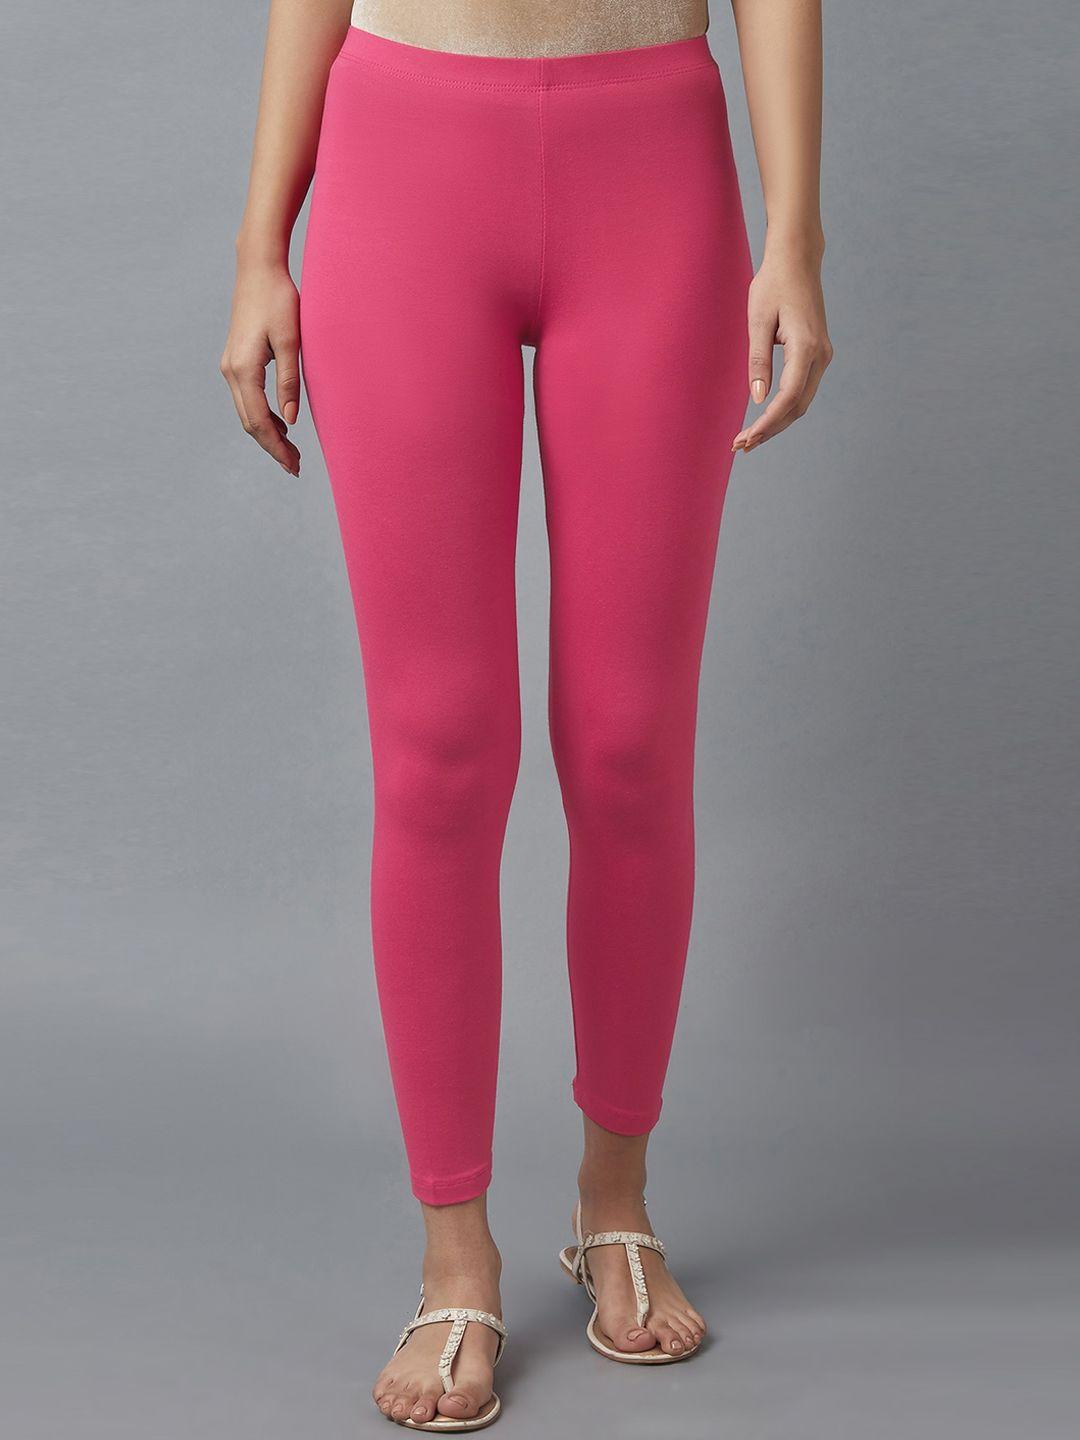 elleven women pink solid tights